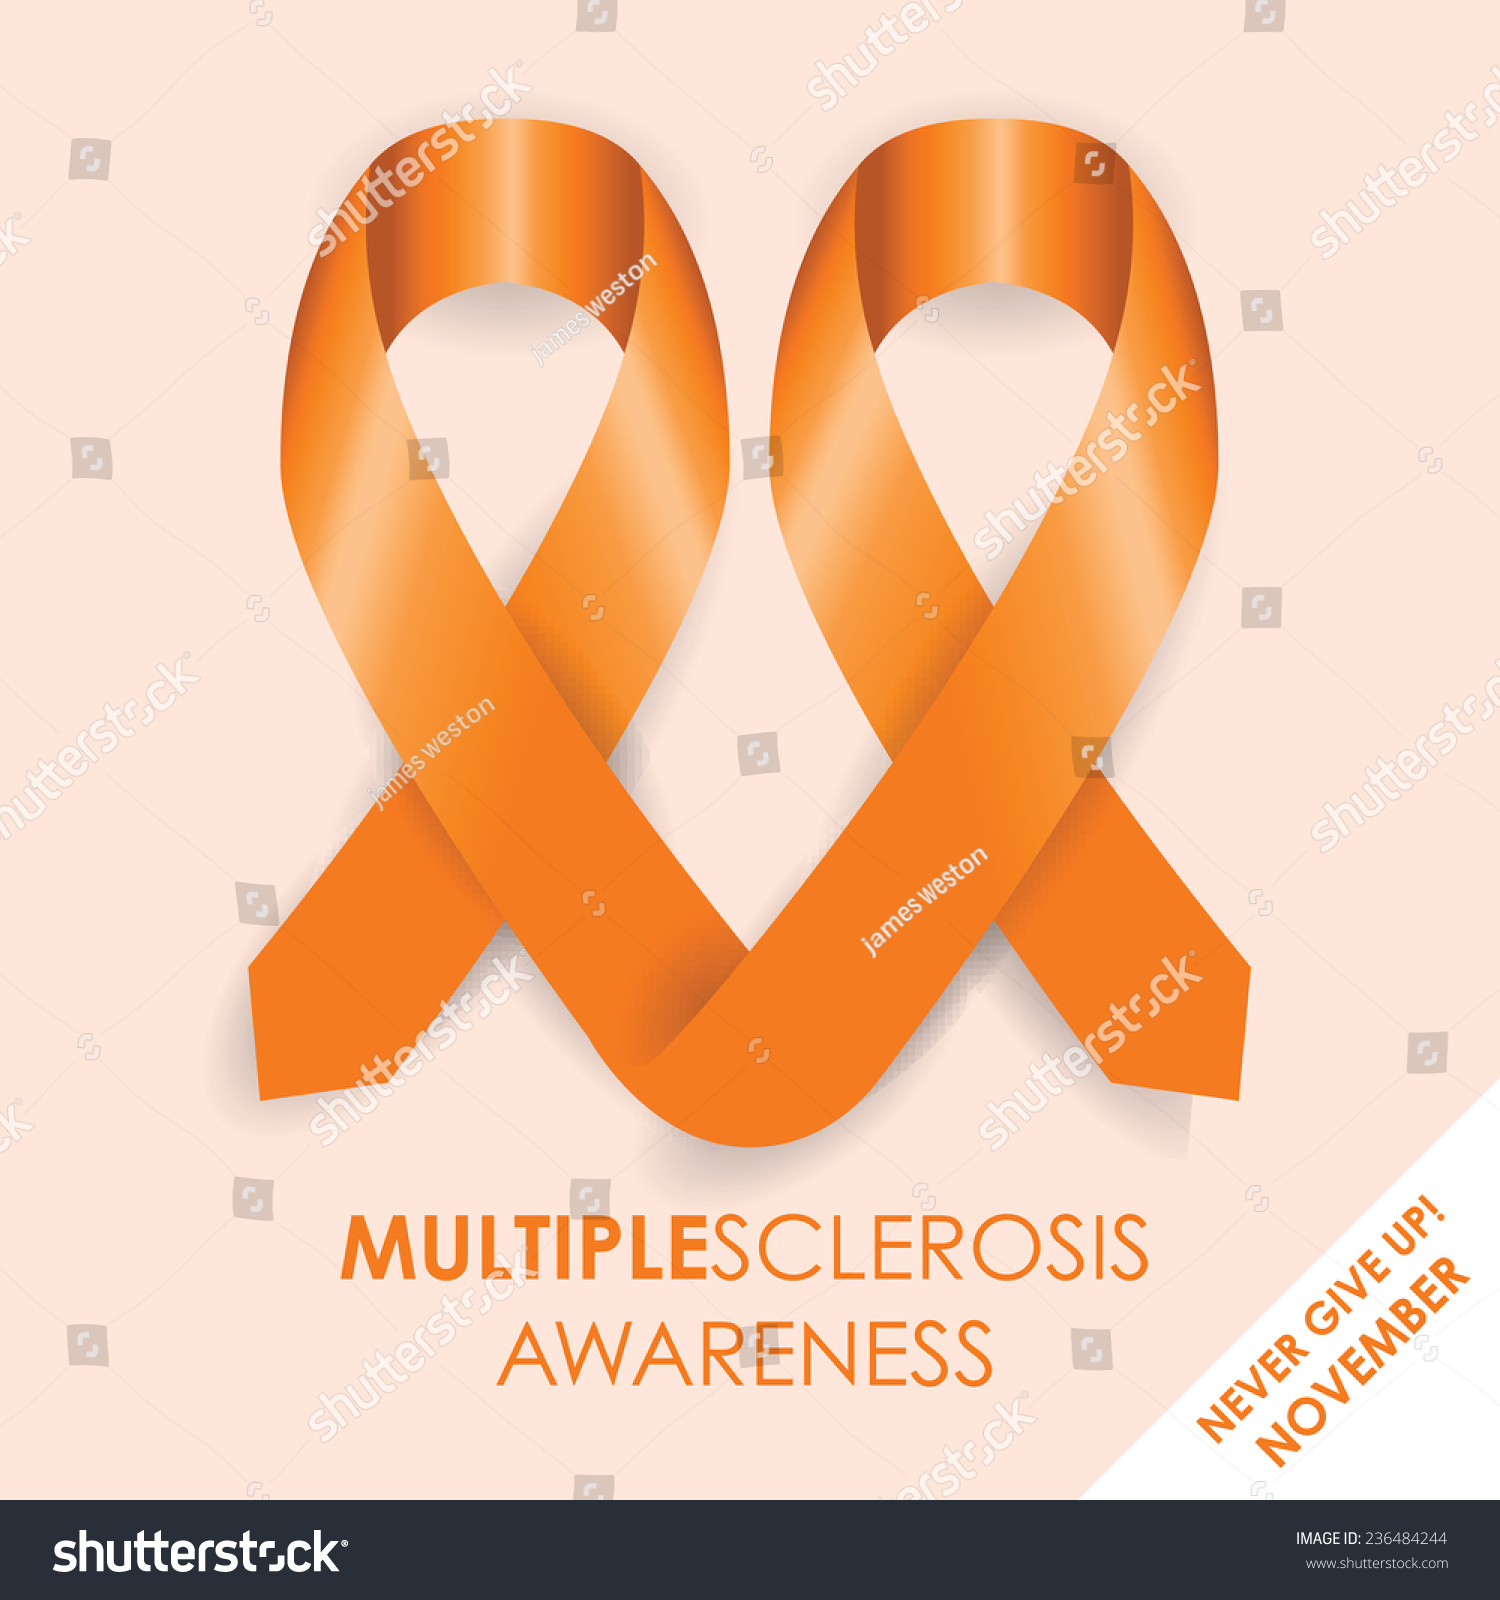 Multiple Sclerosis Ribbon Stock Vector Illustration 236484244 ...